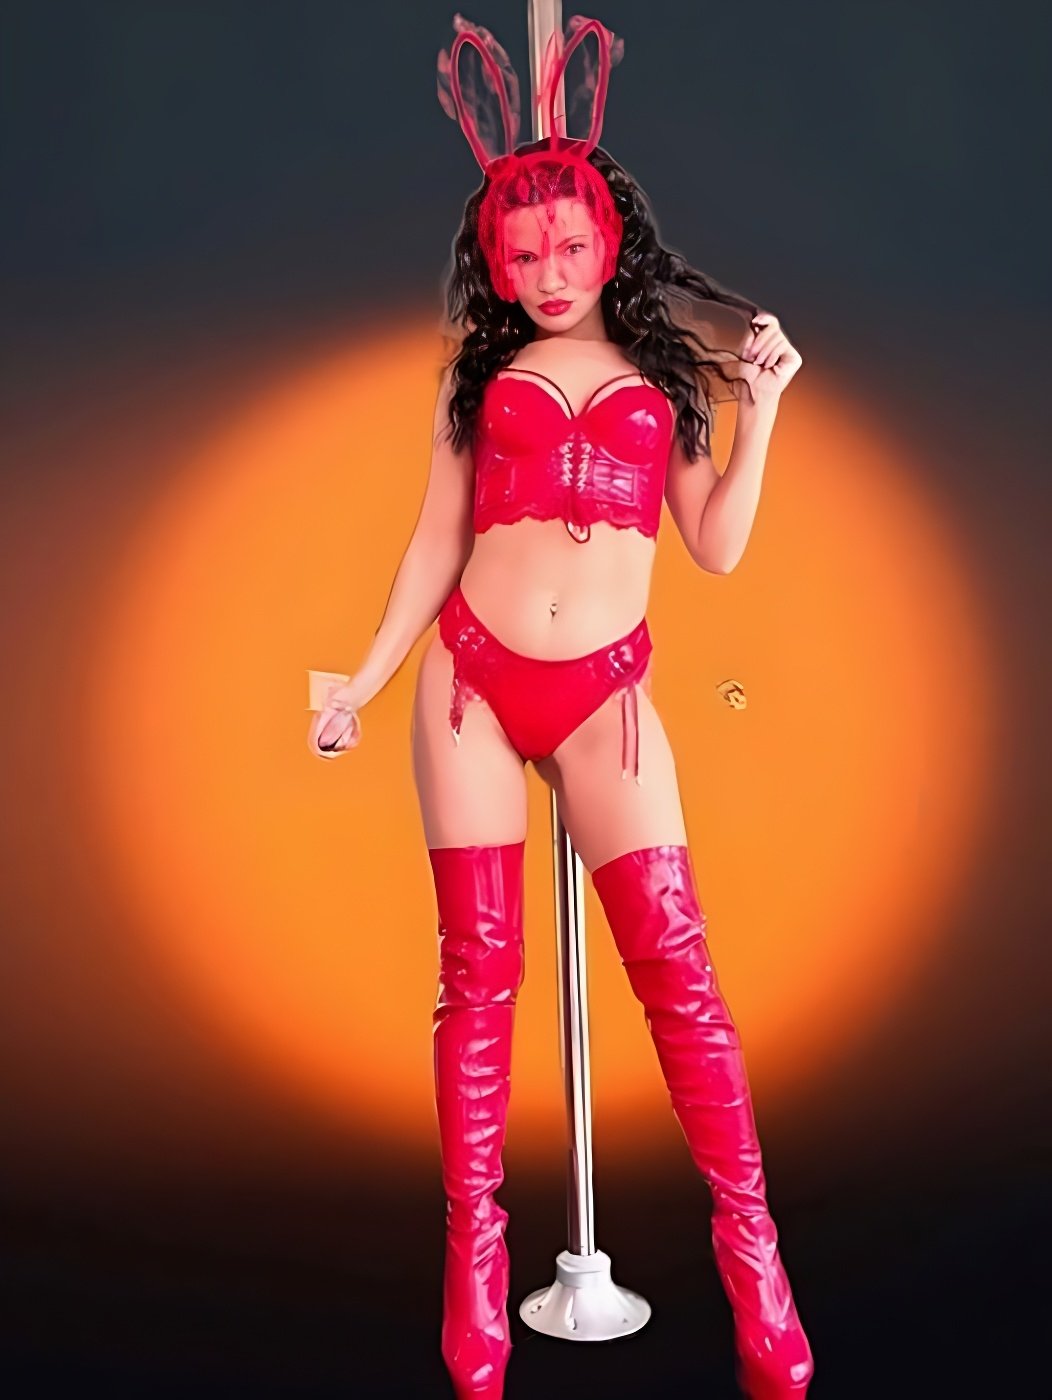 Meet Amazing Mini: Top Escort Girl - model preview photo 0 